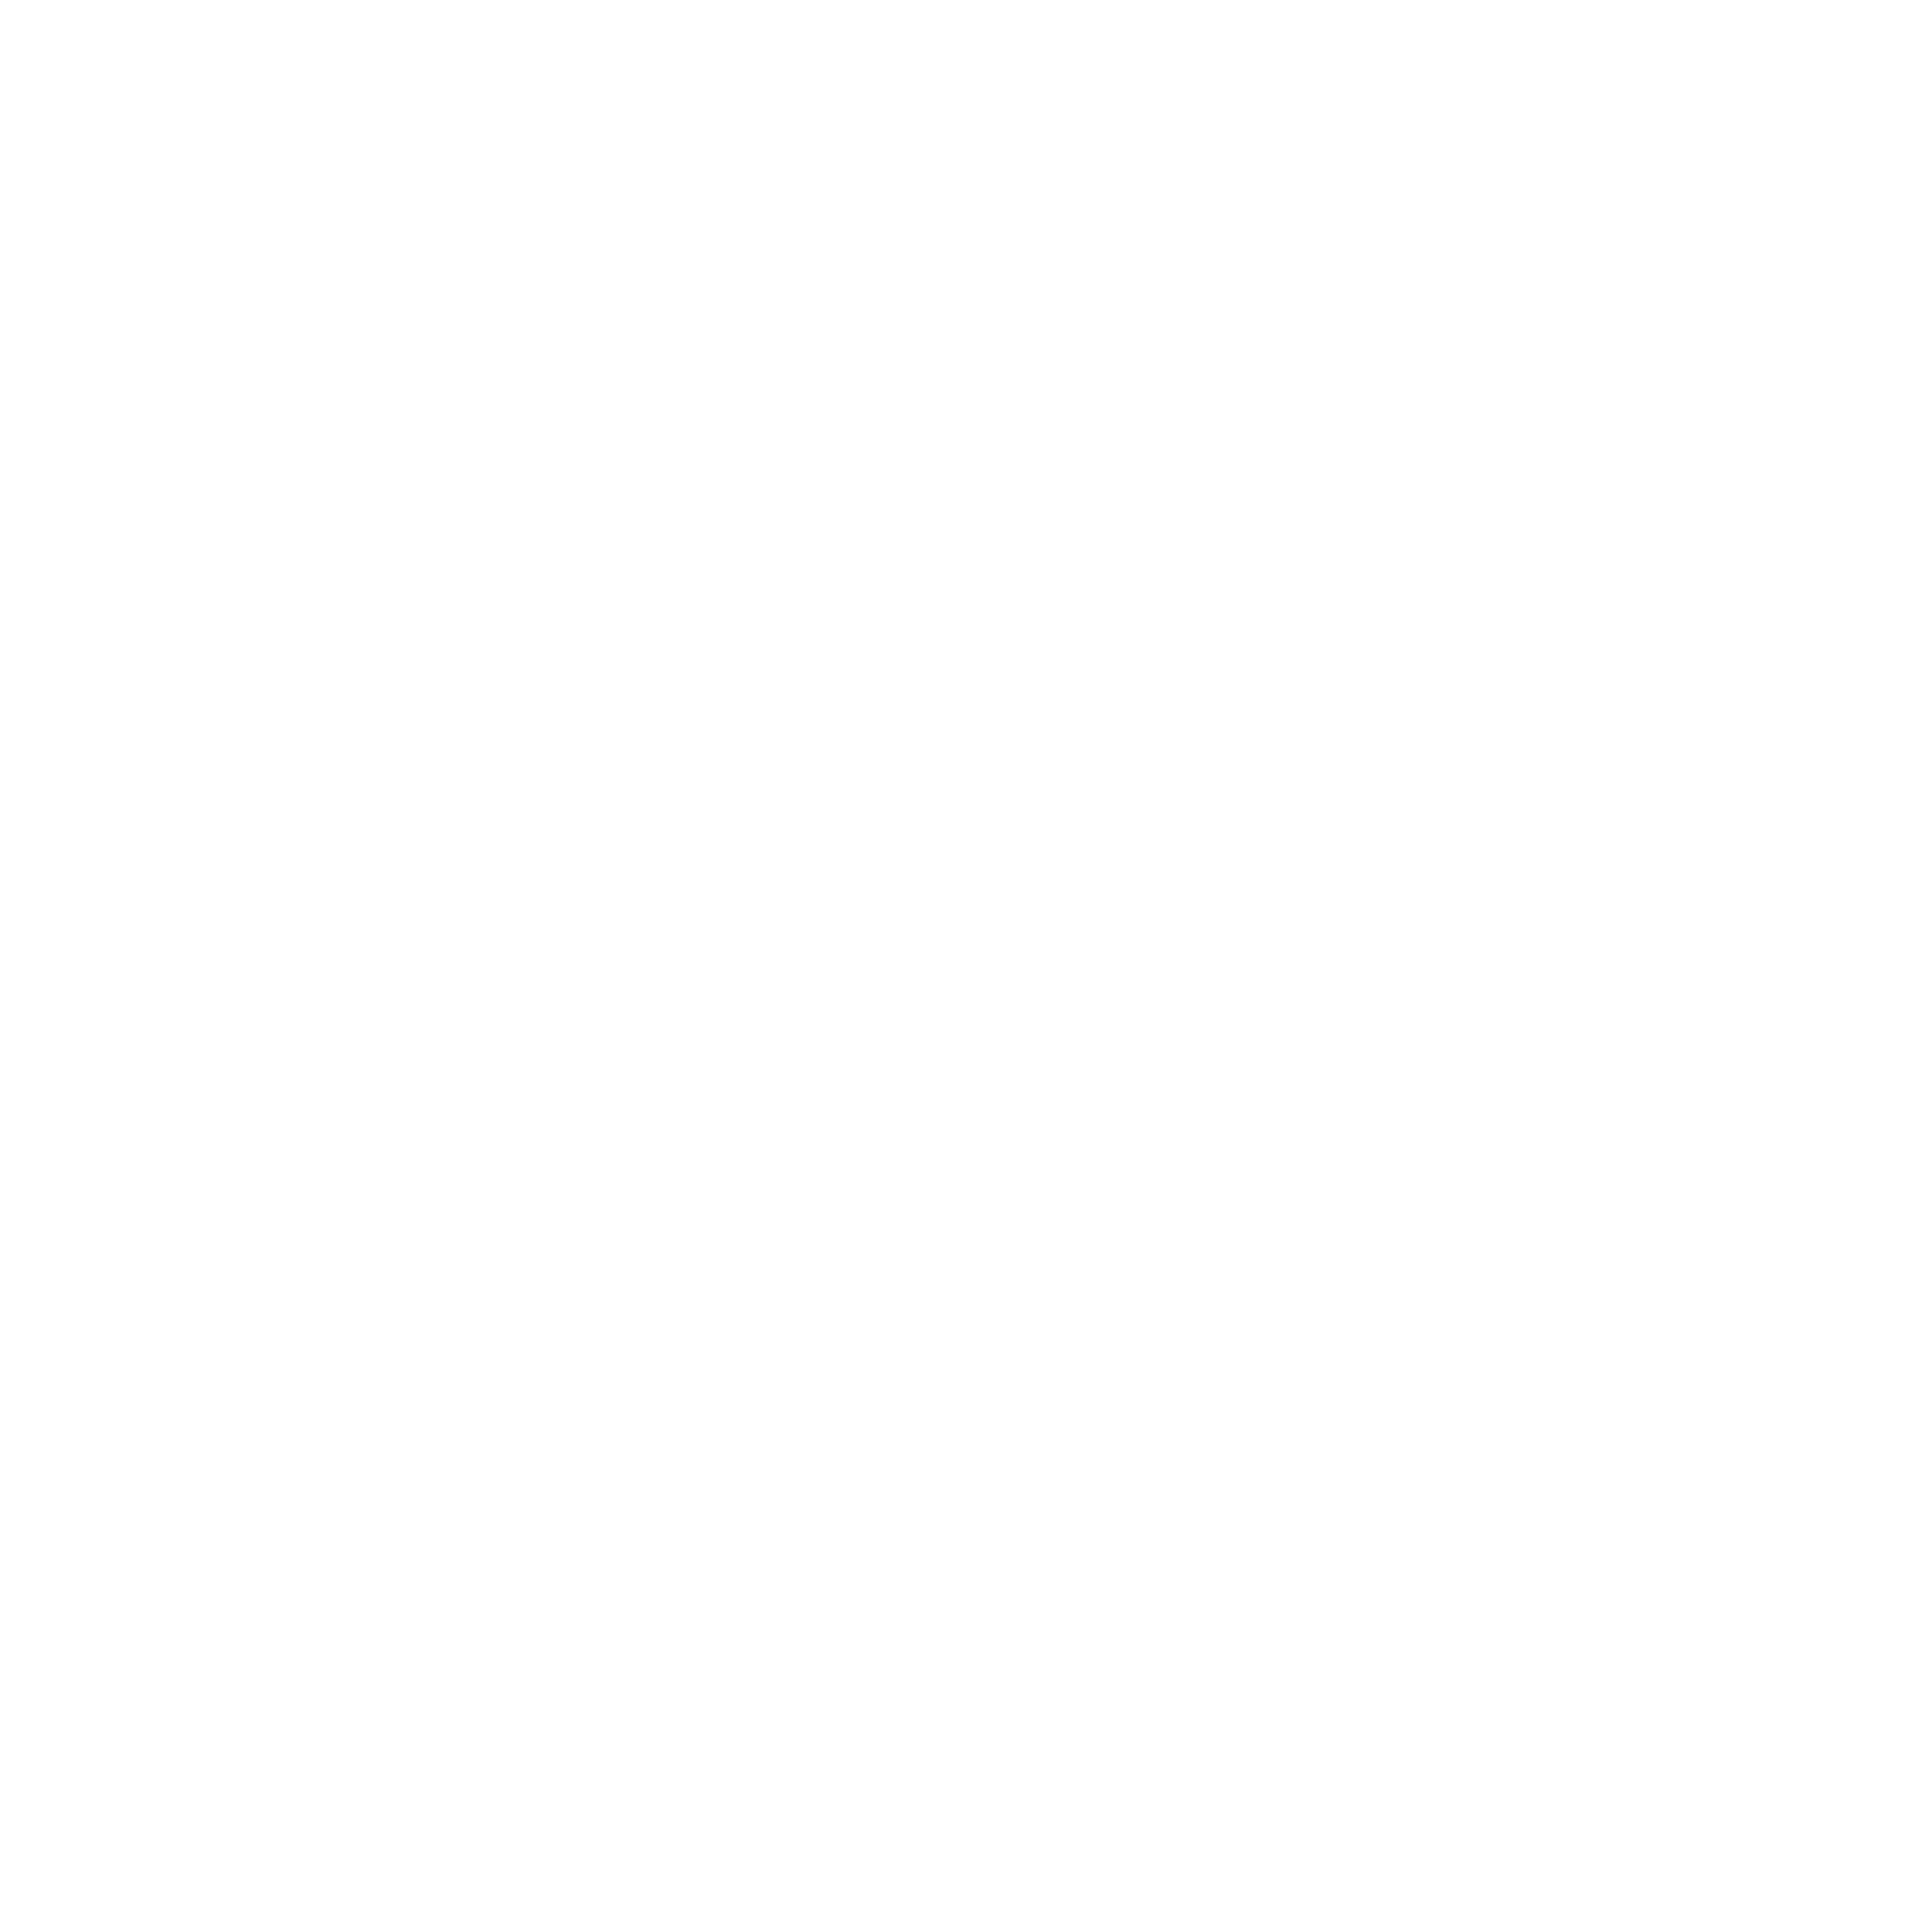 Zachary Donnenfield